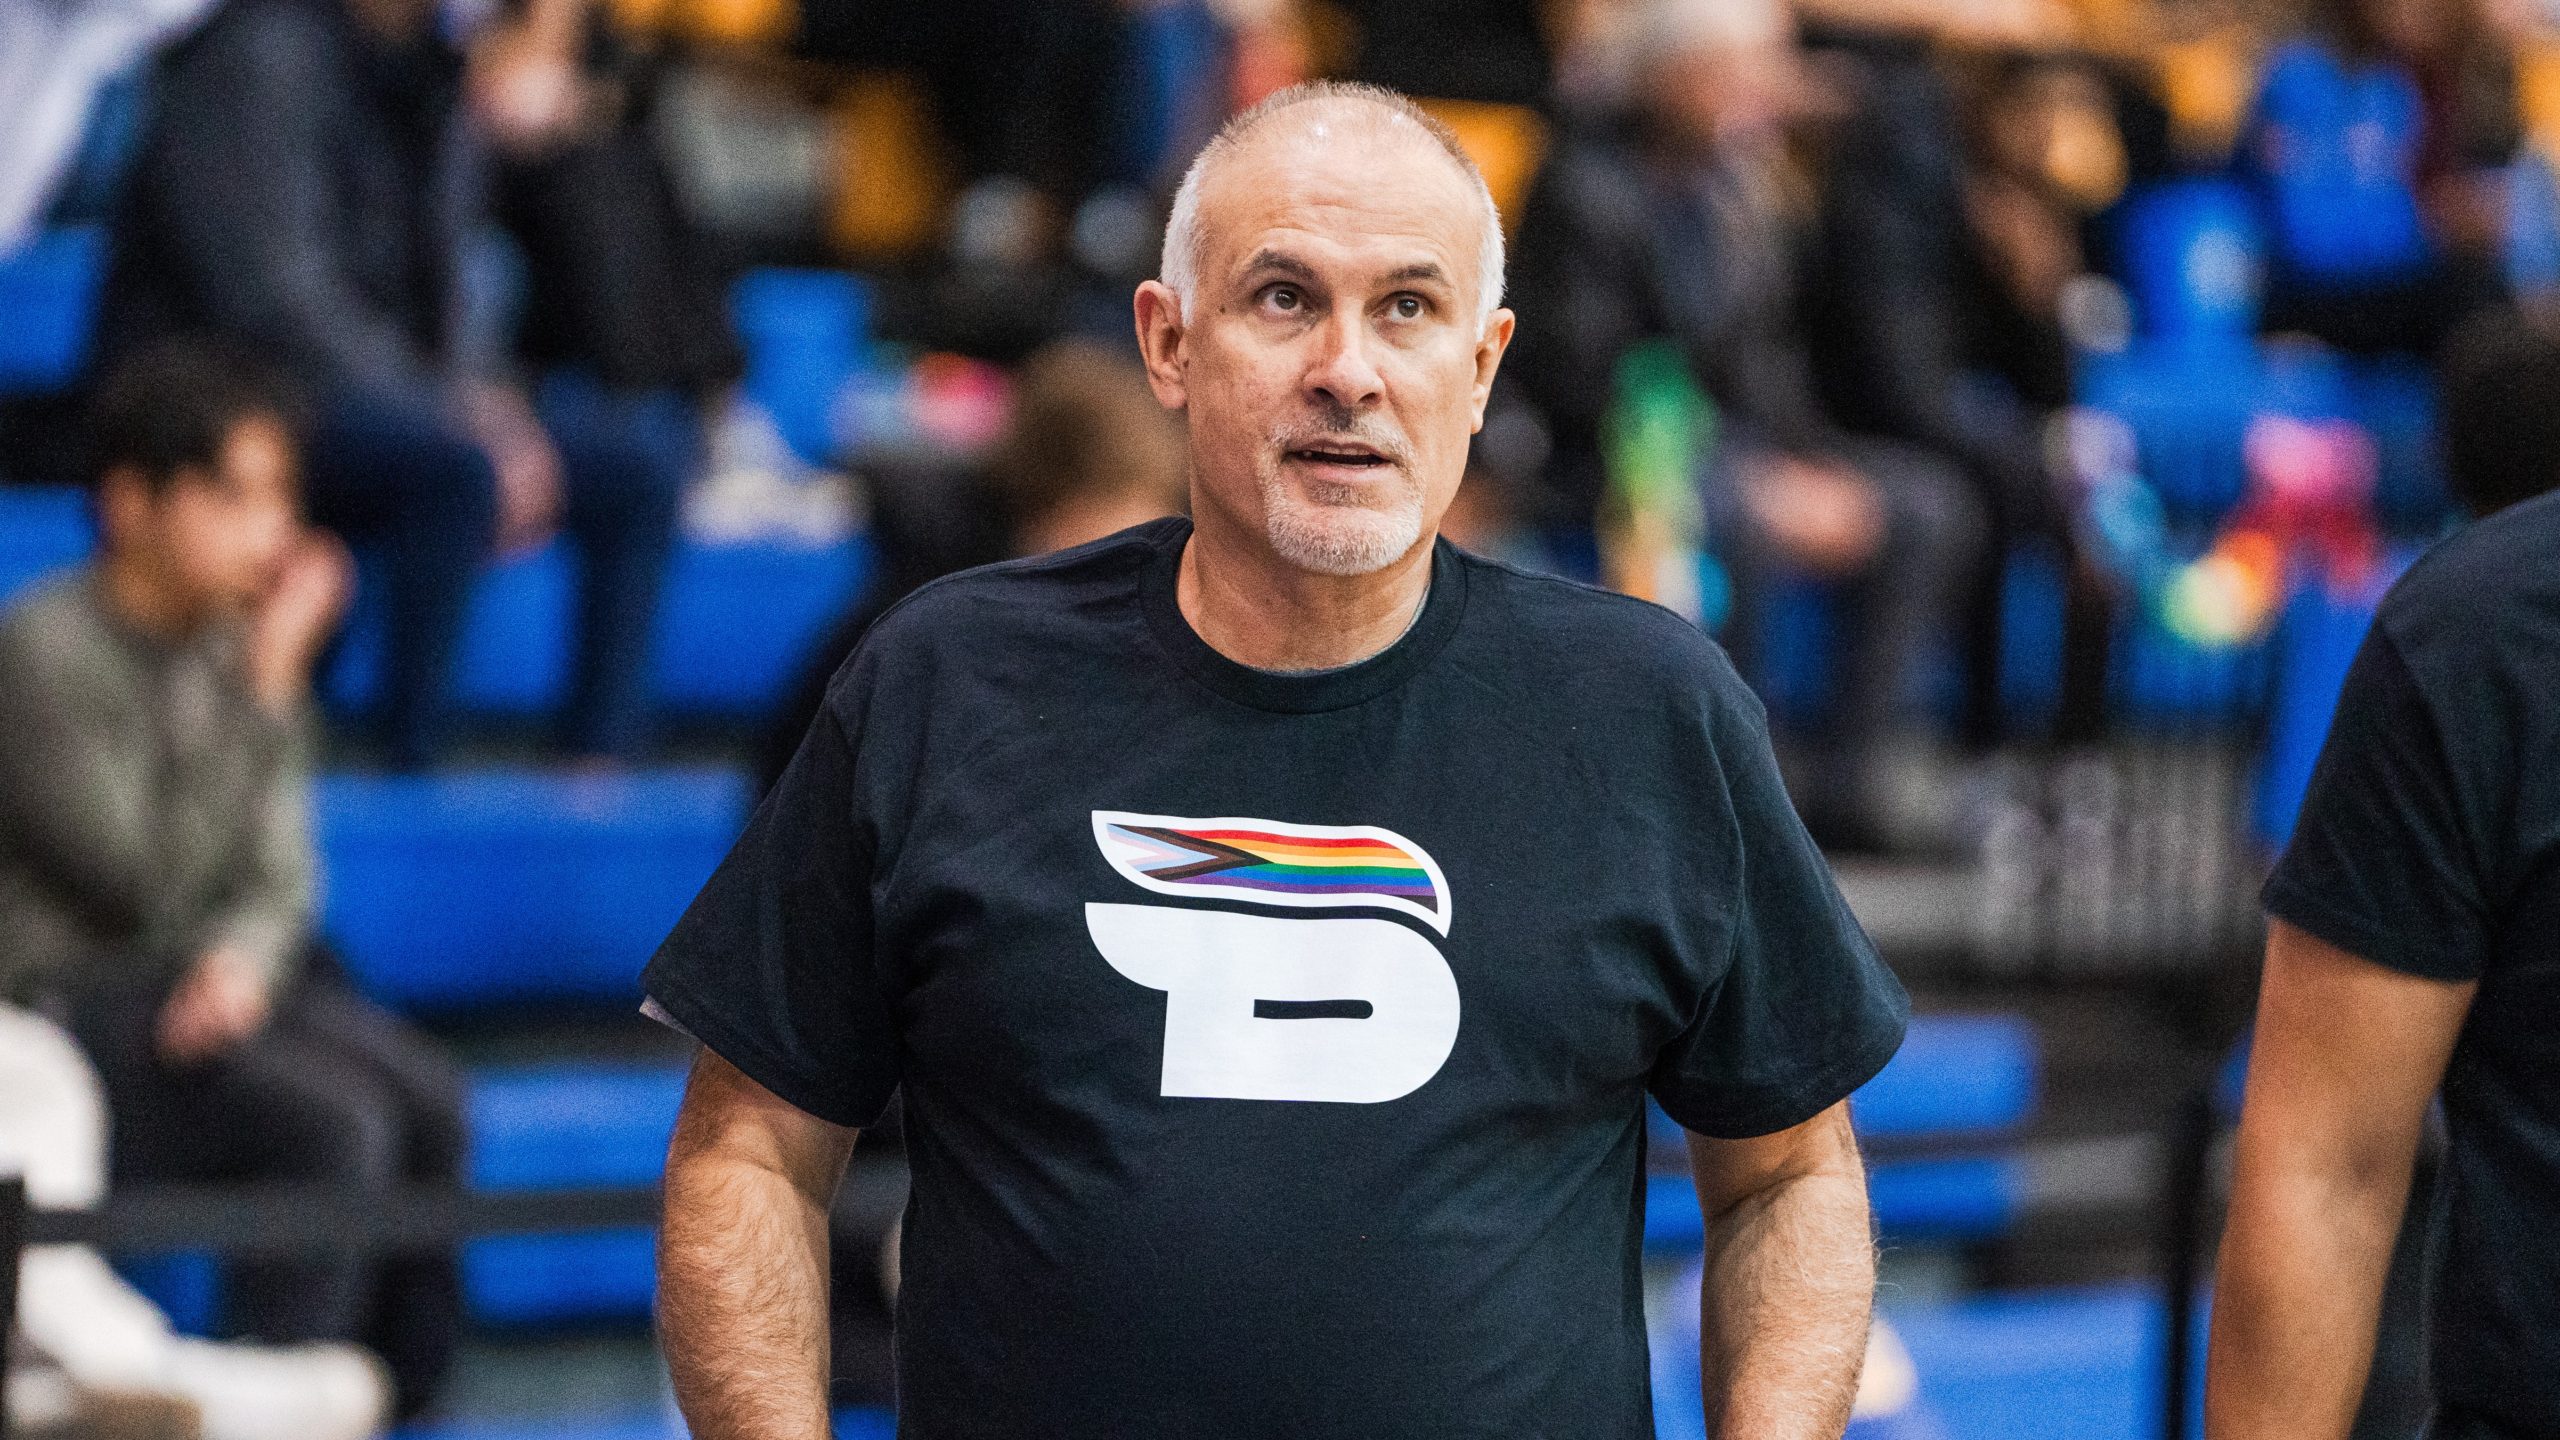 TMU men's basketball head coach David DeAveiro stands on the court wearing the Bold Pride shirt